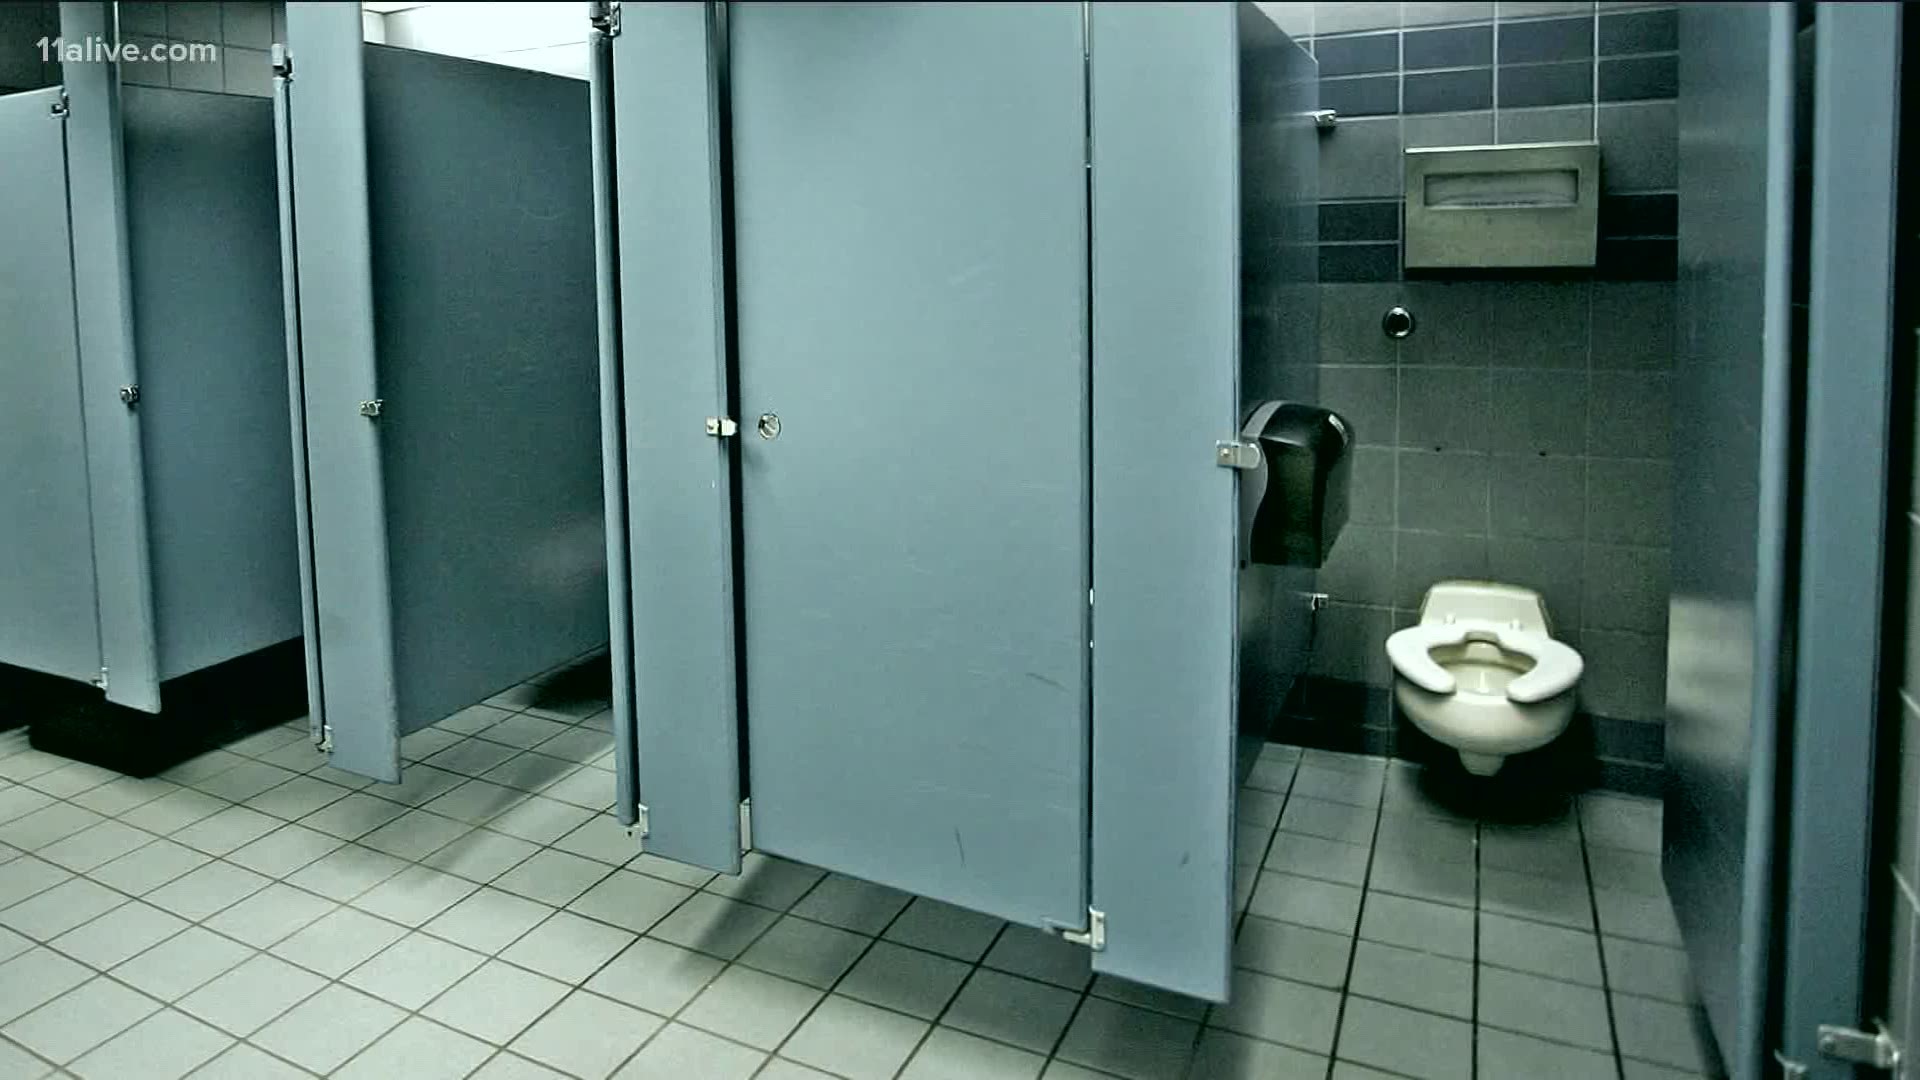 https://www.11alive.com/article/news/health/coronavirus/how-safe-are-public-restrooms/85-a136e647-bbb5-4449-8fcb-4993af8c29d6